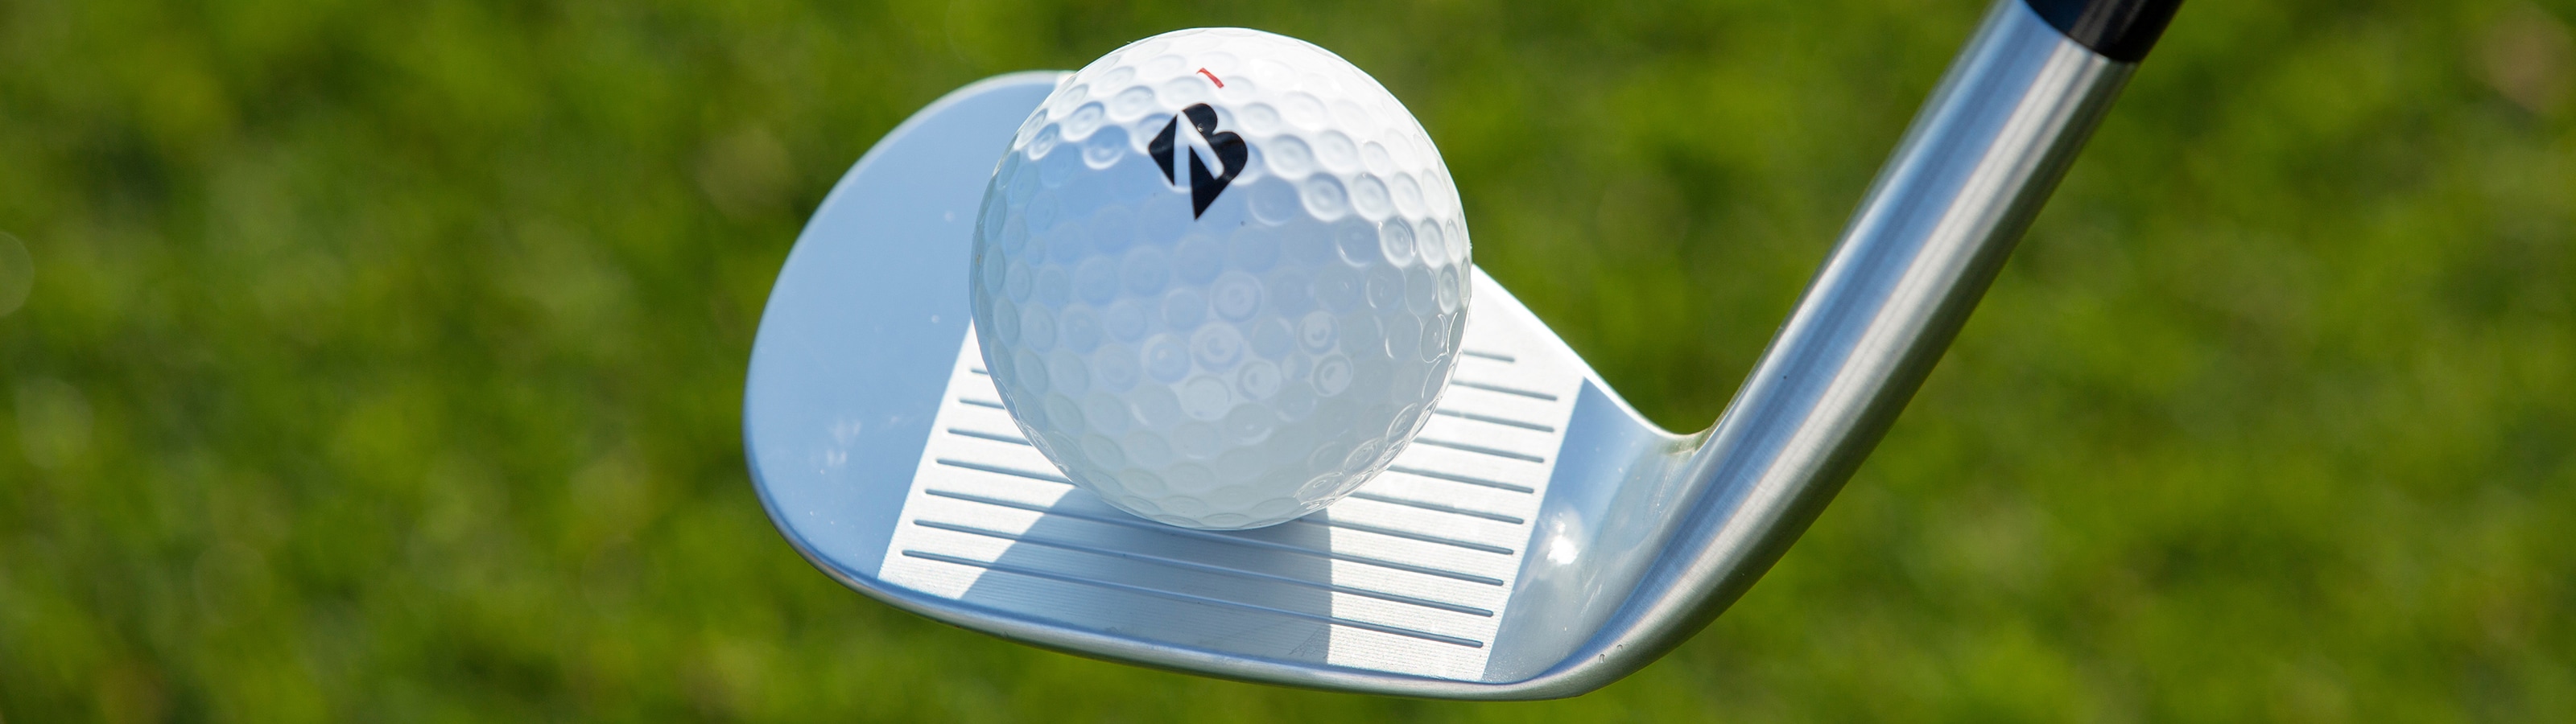 Bridgestone Golf Clubs - Drivers, Woods, Hybrids, Irons & Wedges